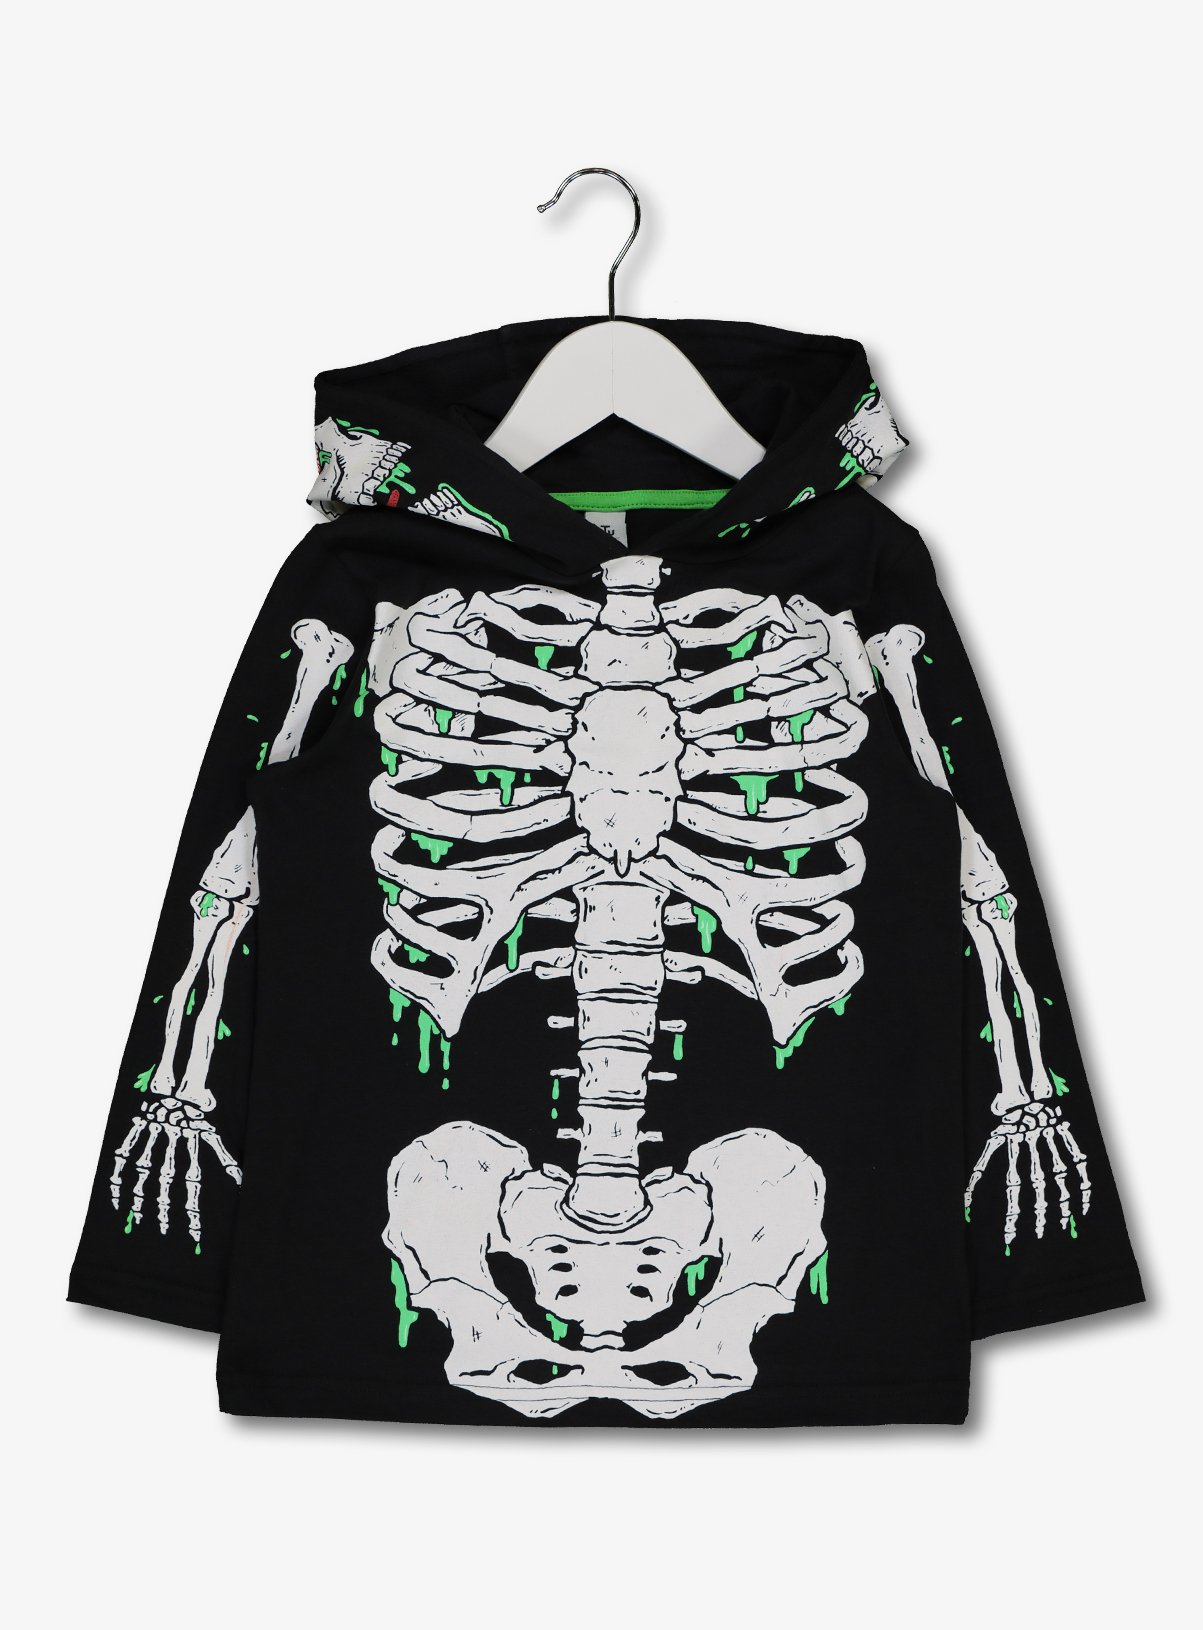 wellcoda Pirate Skeleton Horror Mens Sweatshirt Casual Jumper 